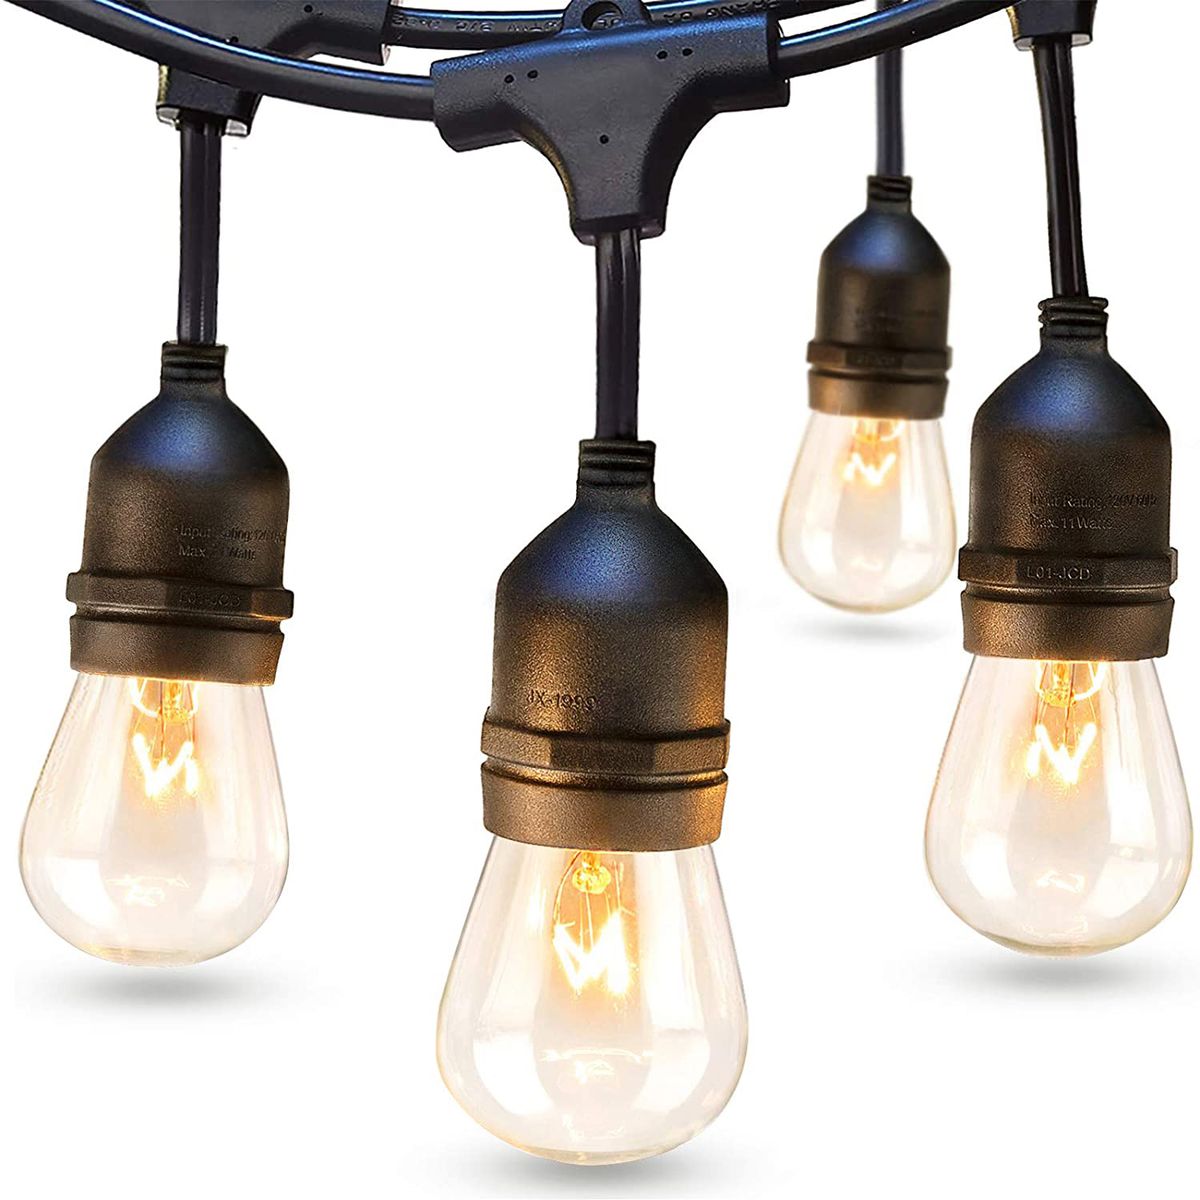 Addlon outdoor Edison string lights